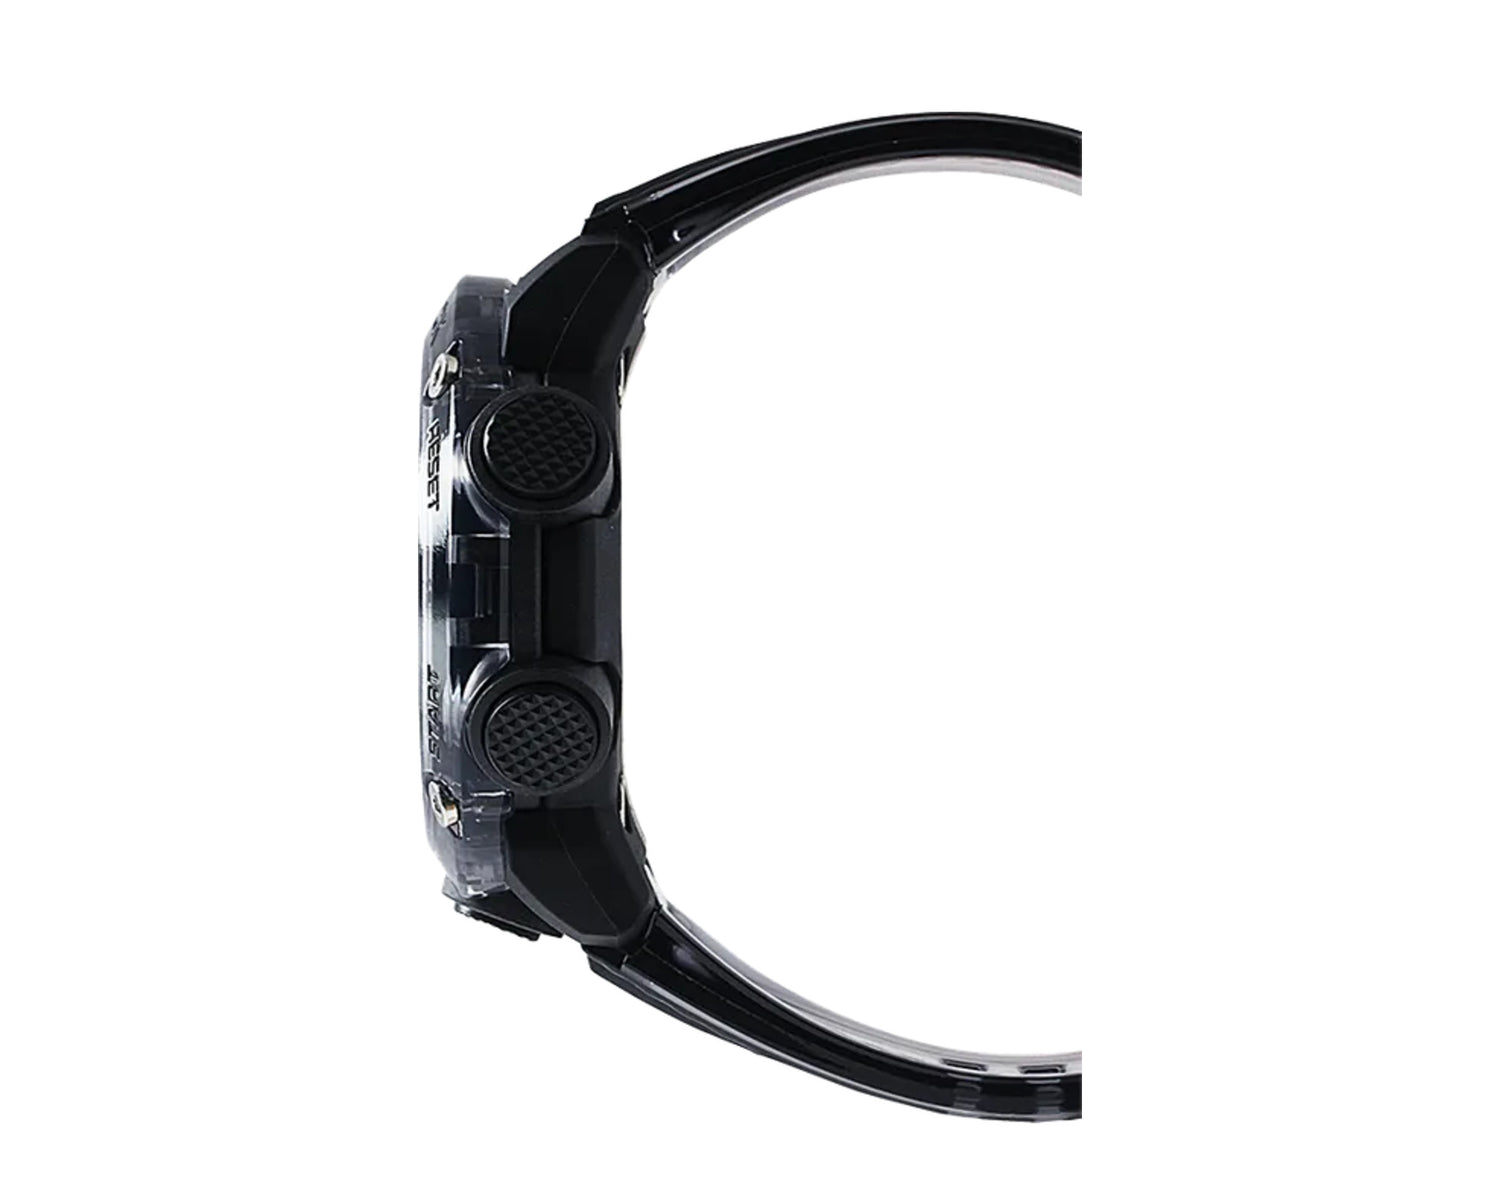 Casio G-Shock GA2000SKE Transparent Pack Front Button Analog-Digital Metal and Resin Men's Watch